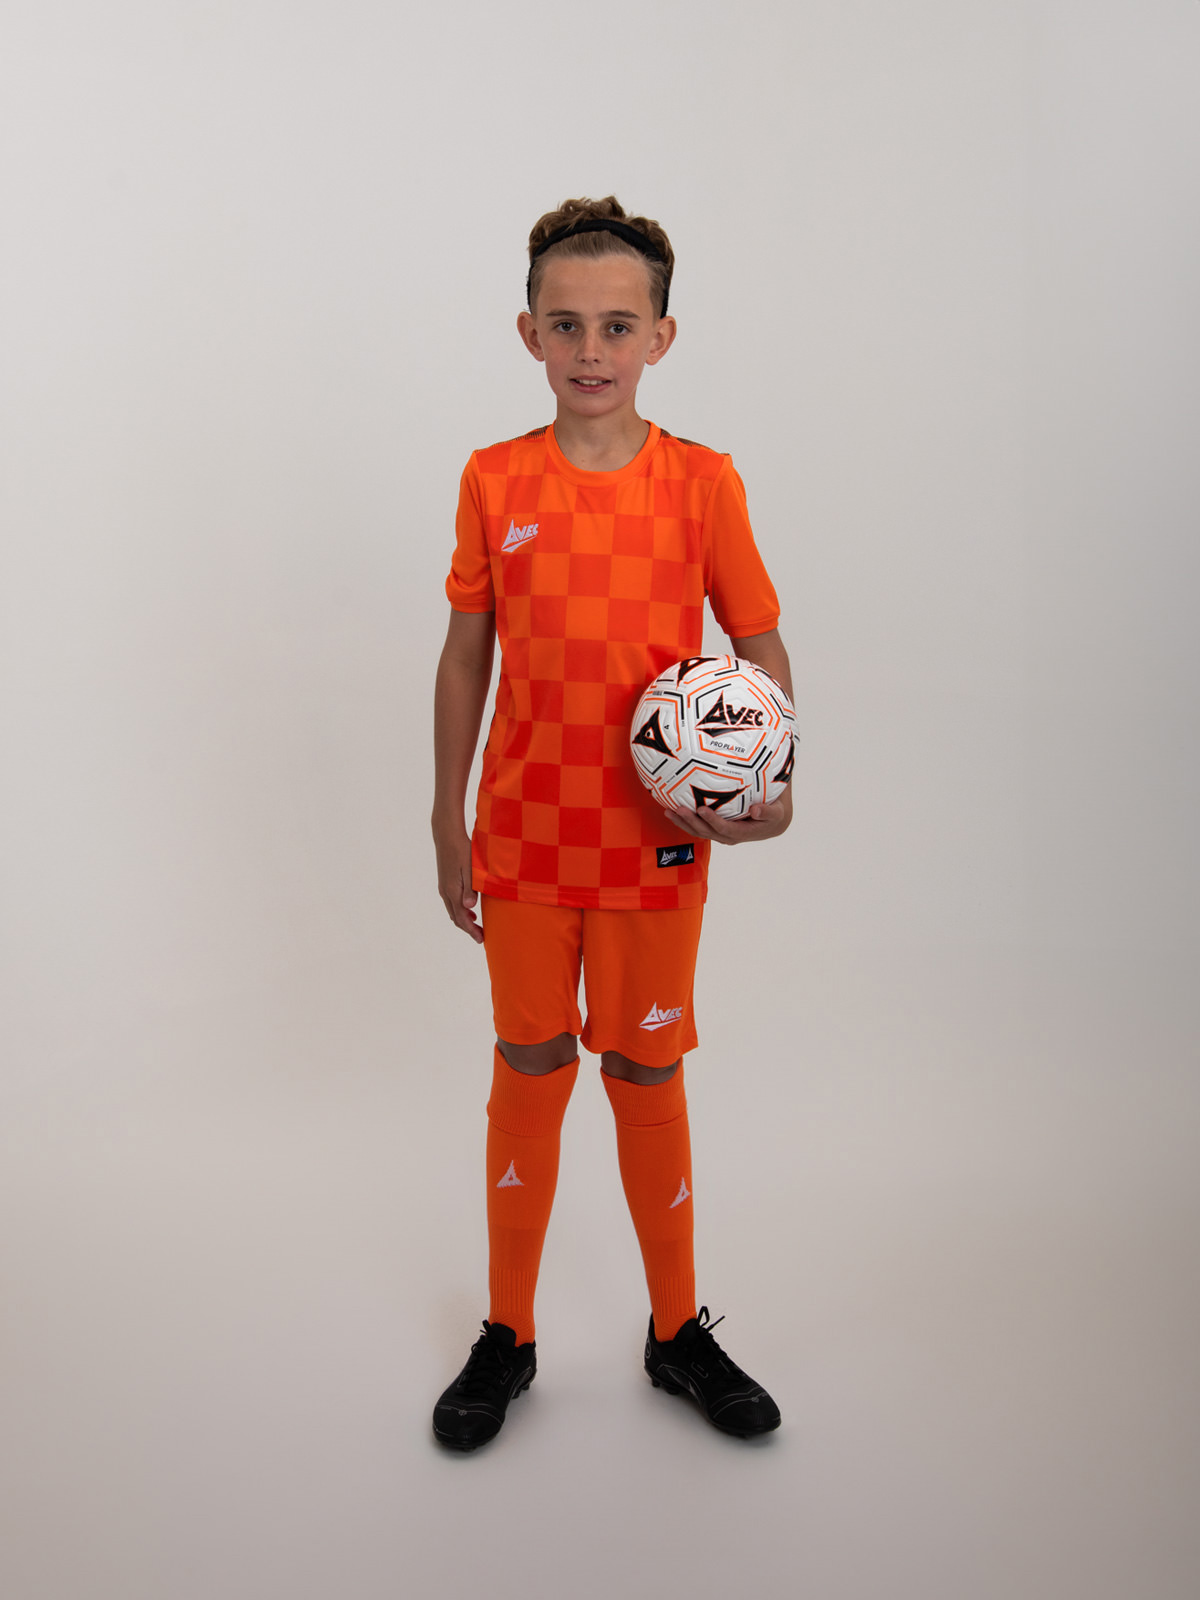 a child's orange football kit